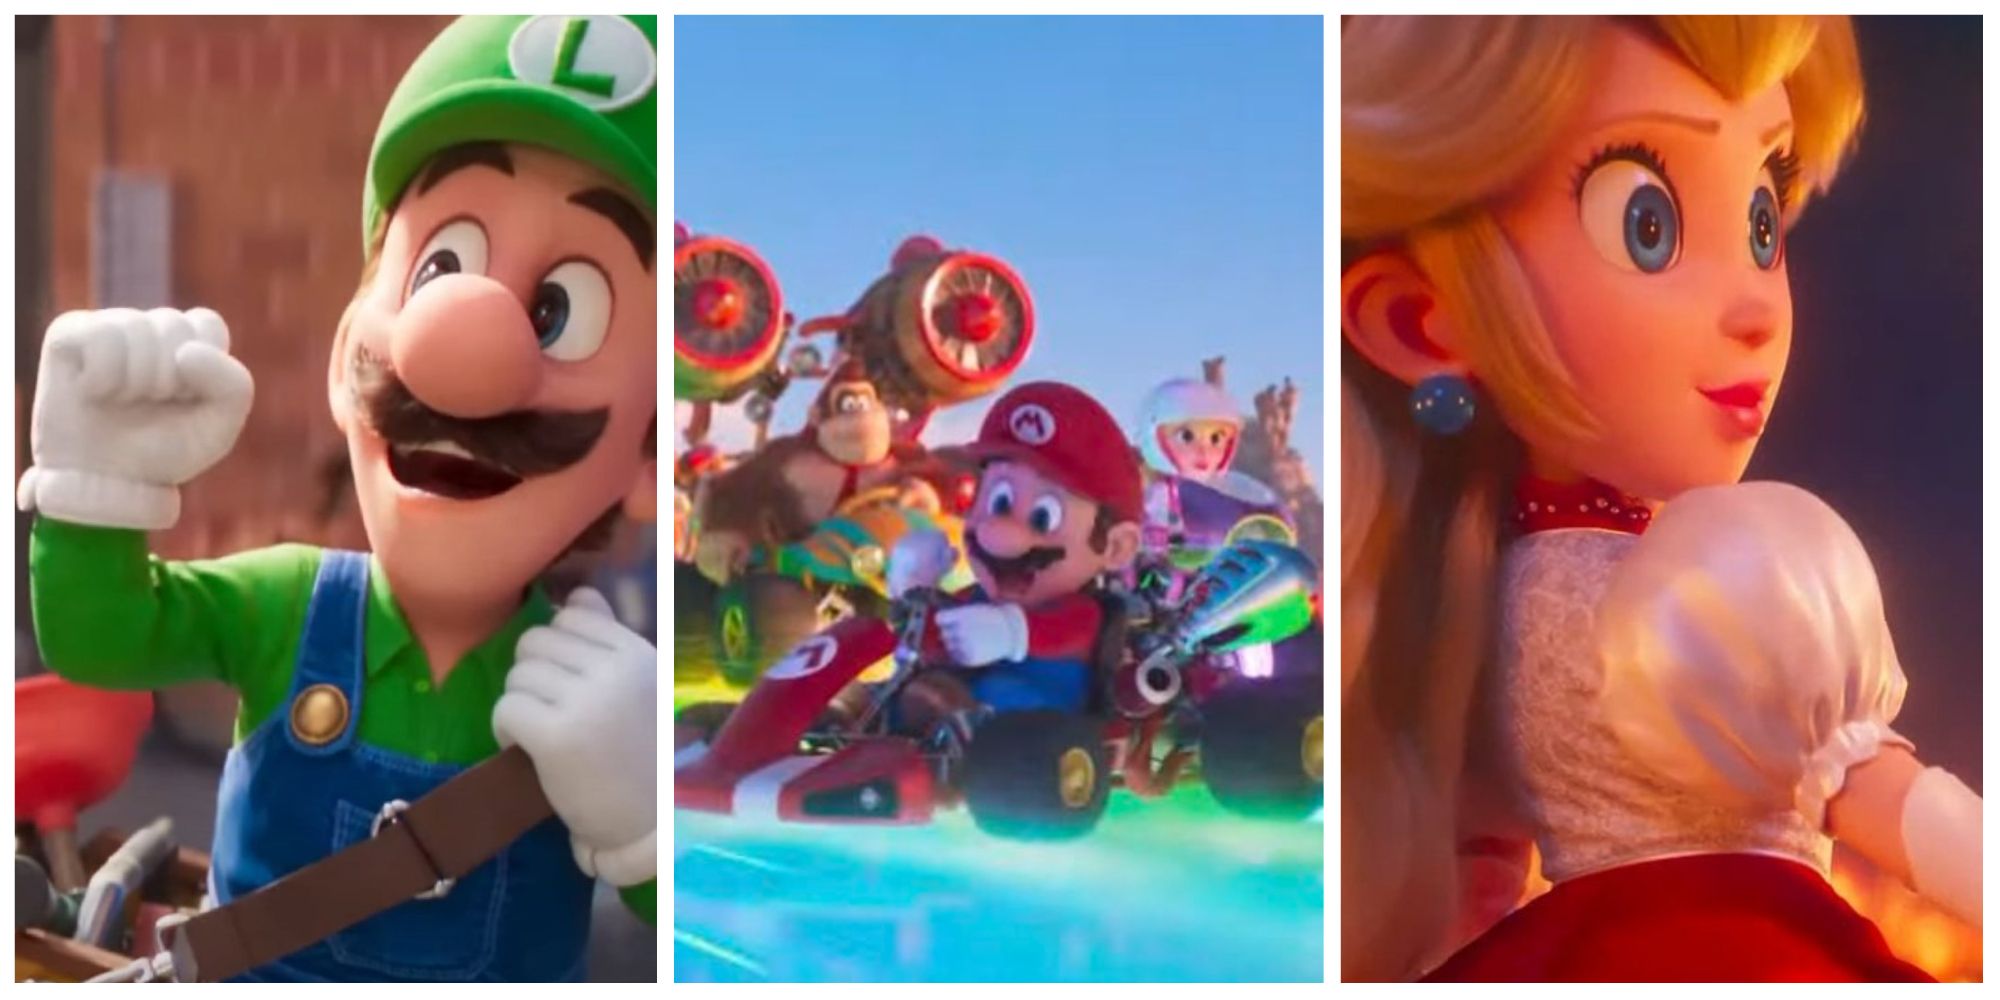 5 easter eggs do novo trailer de Super Mario Bros: O Filme